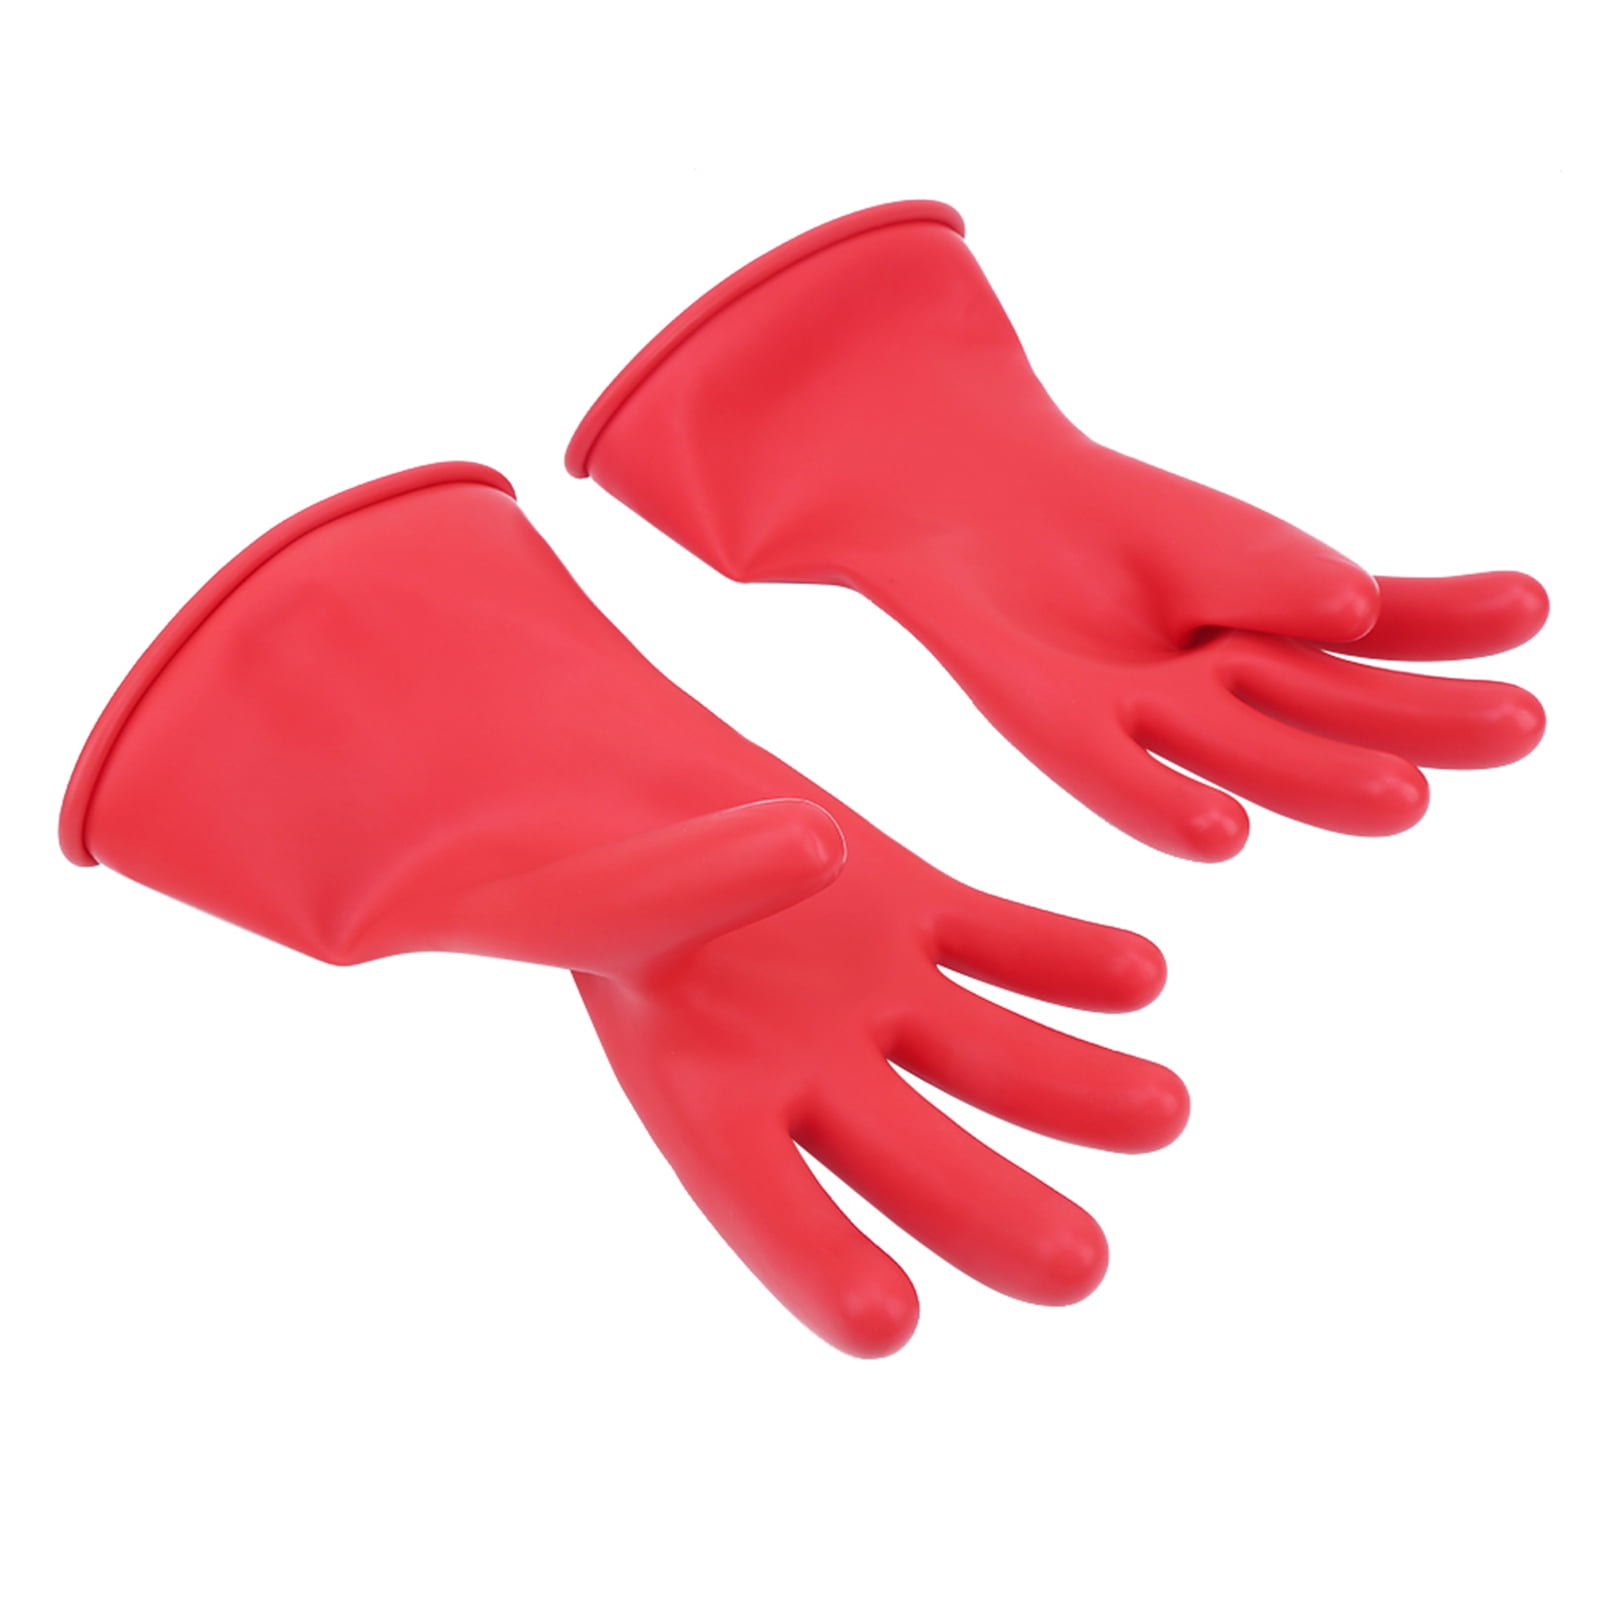 Insulating Gloves, Reusable Waterproof Gloves Low Voltage 500V